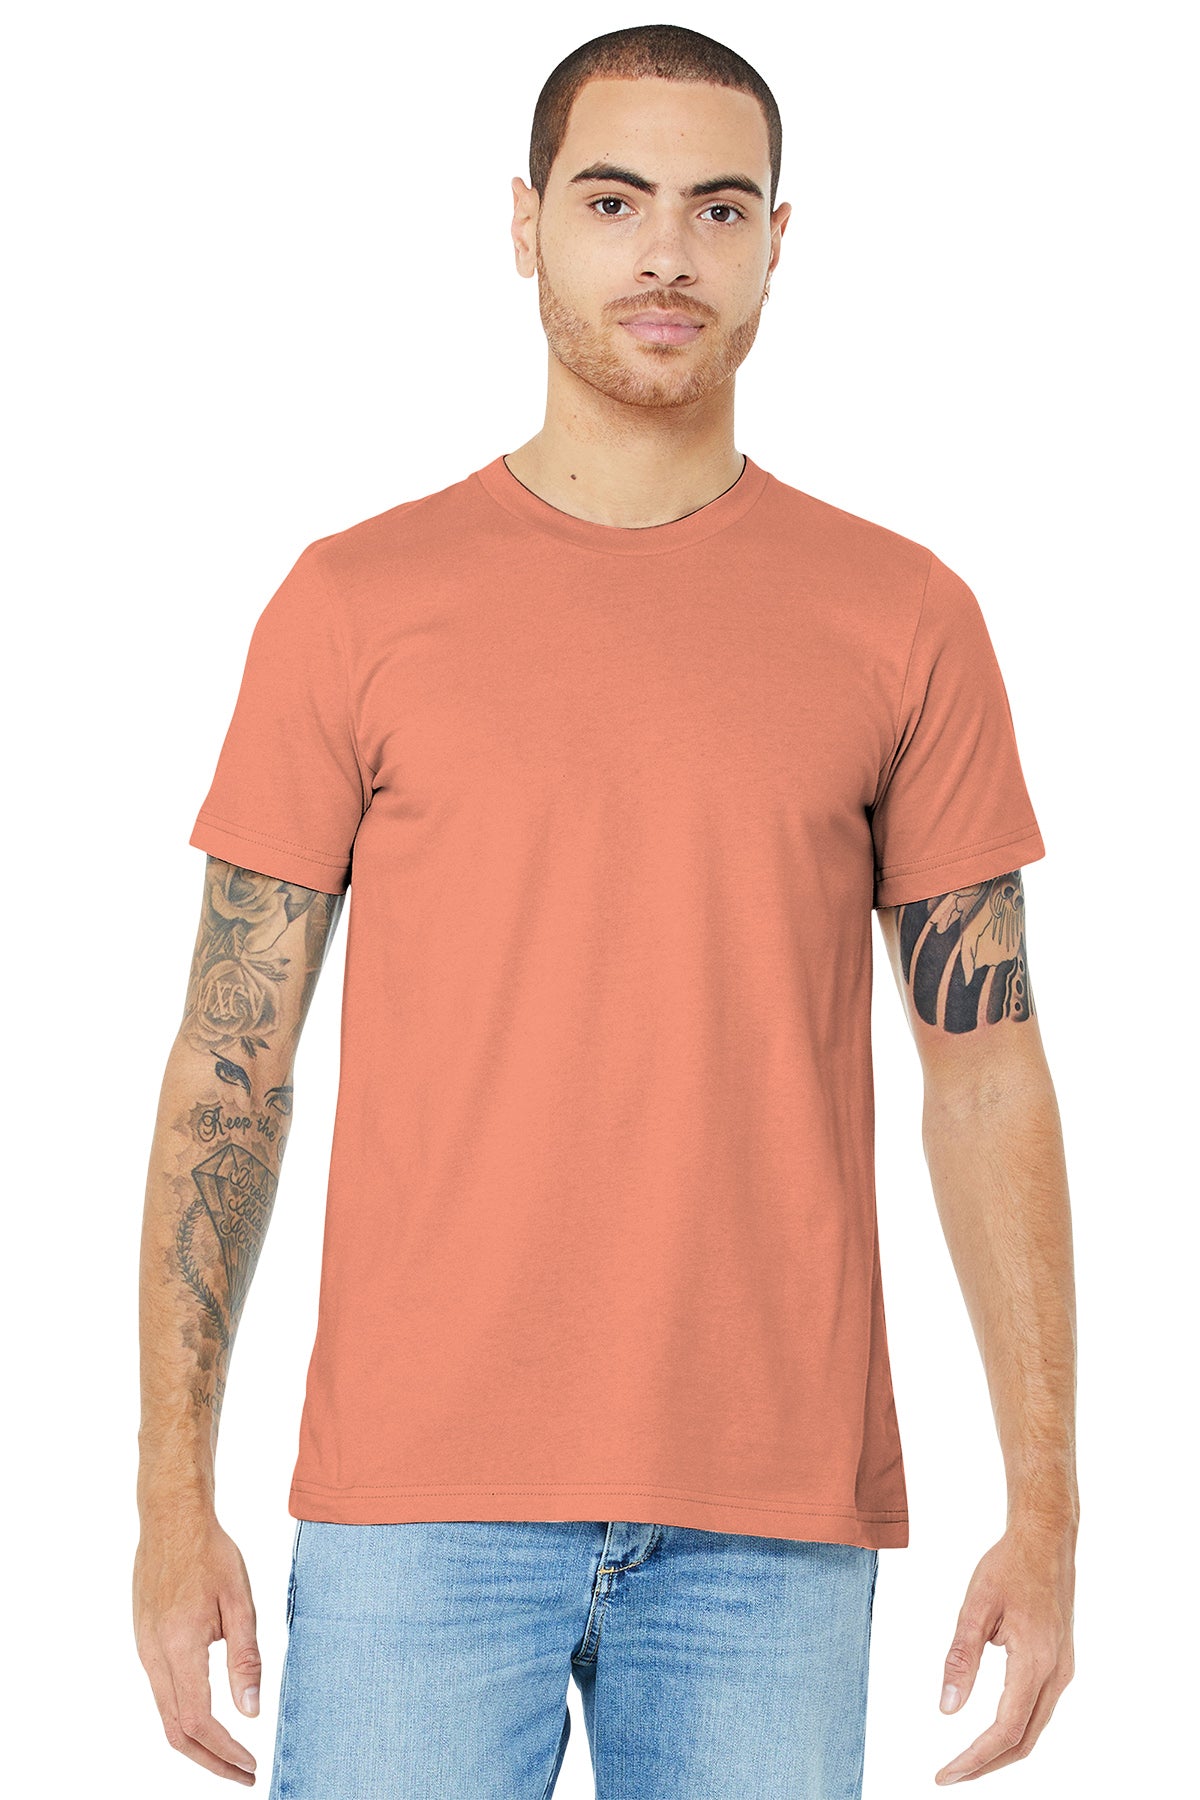 Custom Graphic t-Shirt - Add a Design